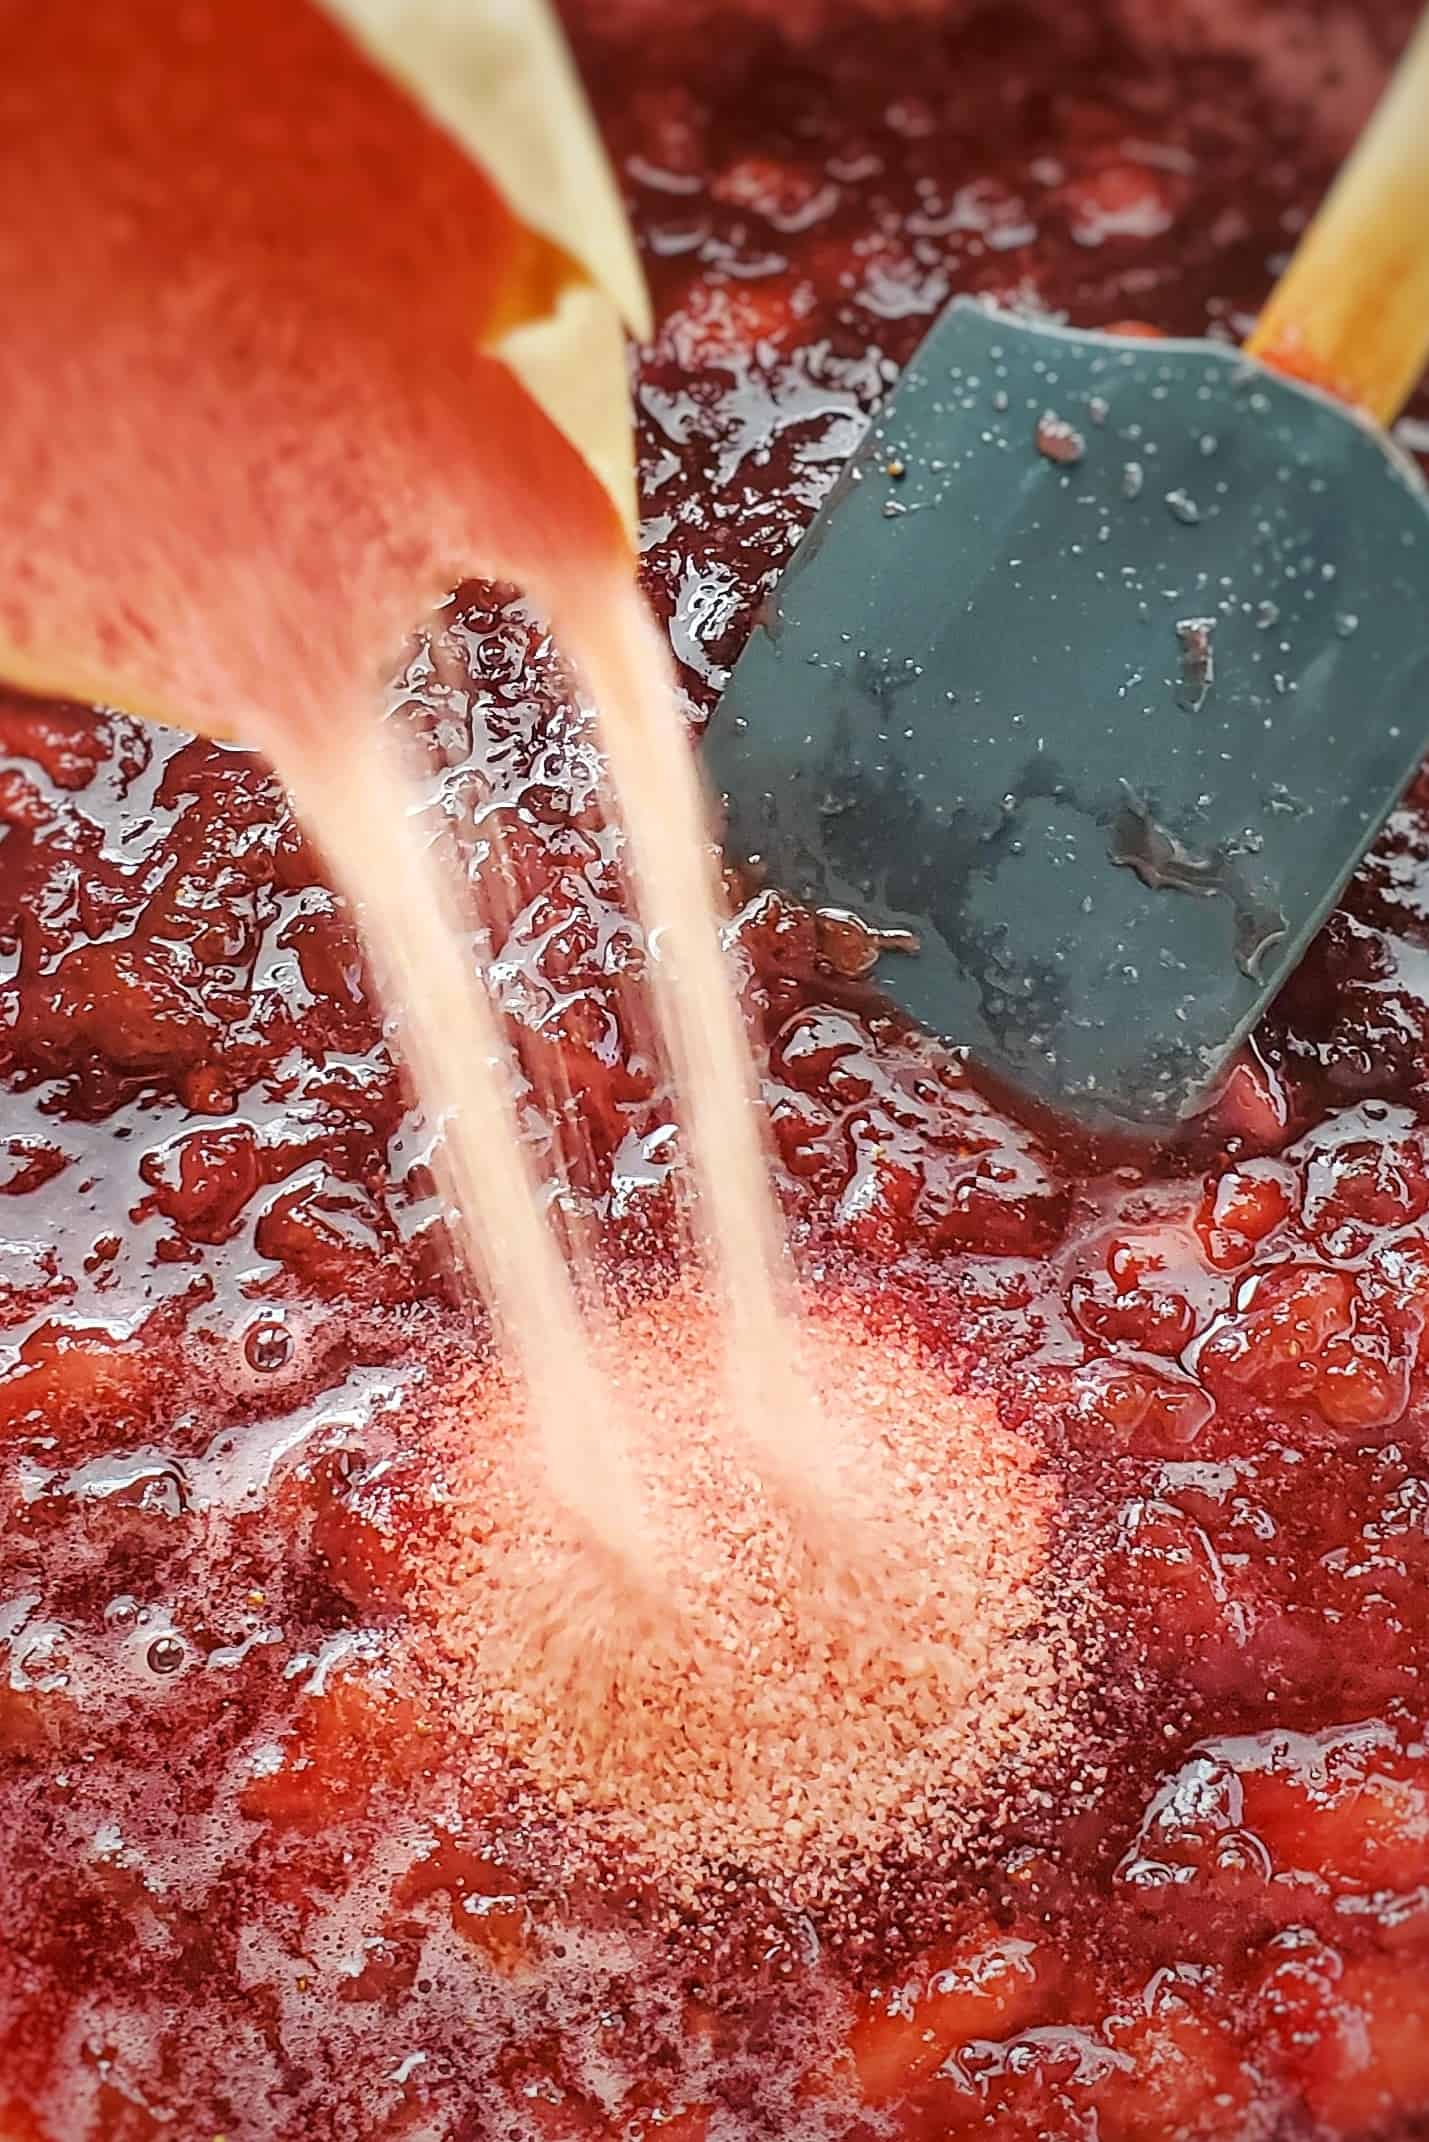 Strawberry gelatin being poured into jam mixture.